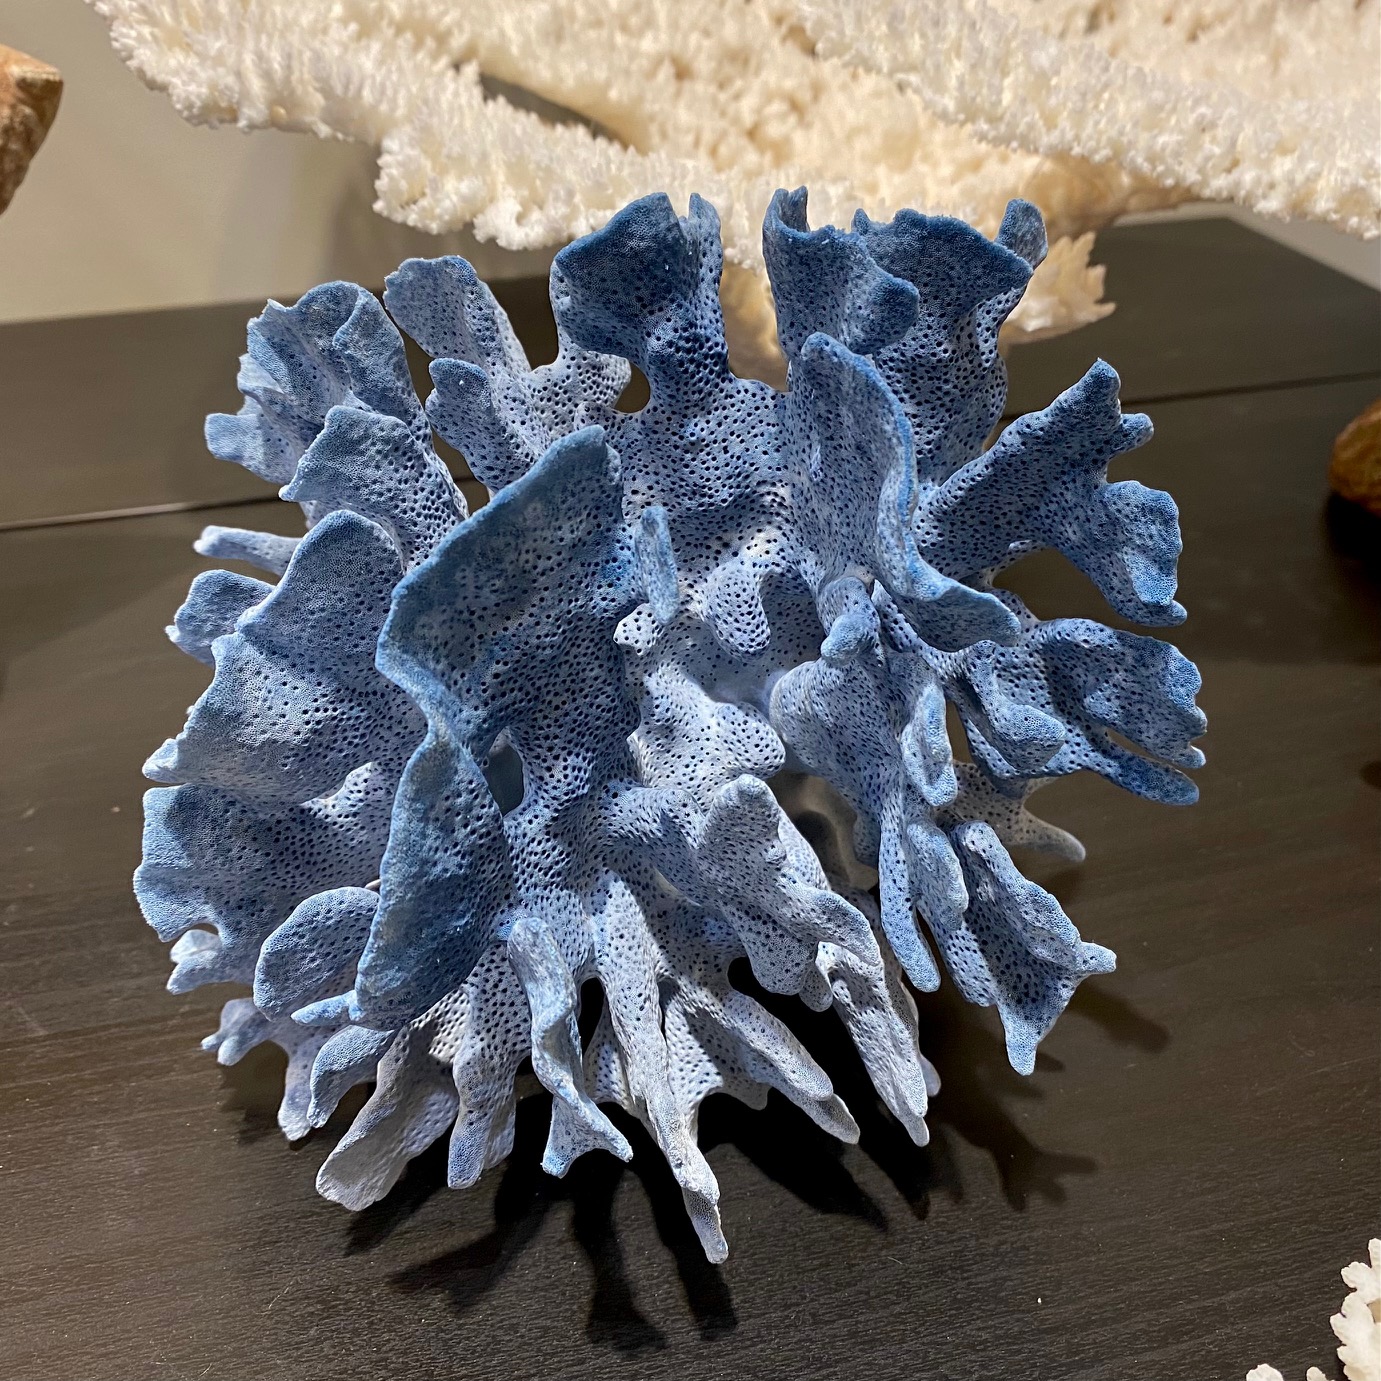 Stunning blue coral specimen